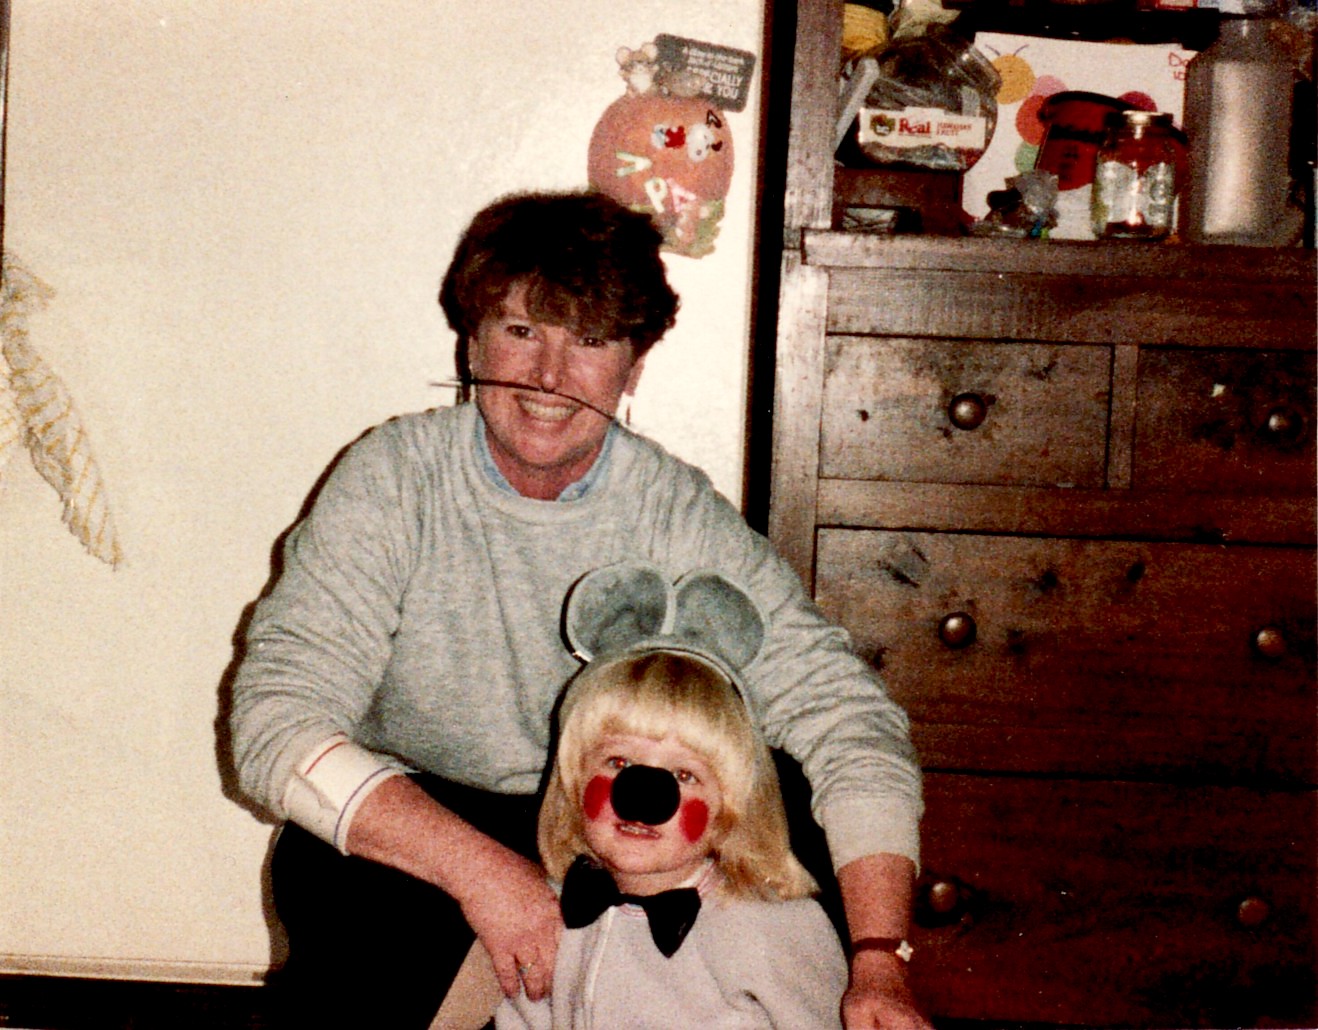 Joan Callahan (Jennifer’s partner) with their son David Crossen, dressed up as a mouse for Halloween, Lexington, KY, 1988.